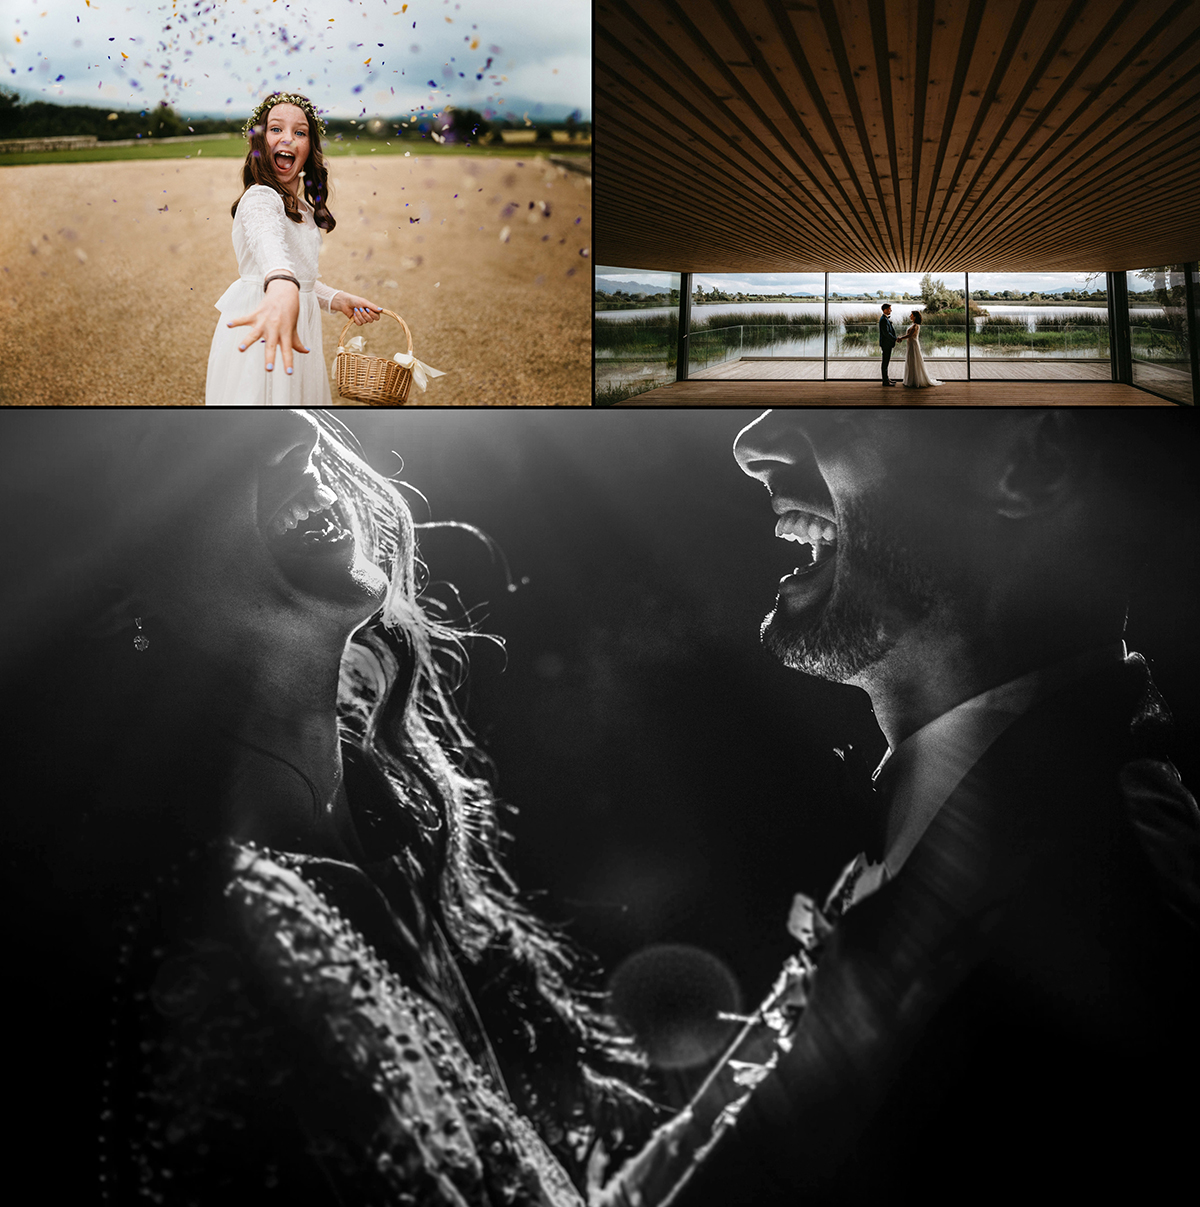 Creative Wedding Photographs by Gareth Lima Conlon, Wedding Photographer of the Year 2022 and Winner of Wedding Creative sub-category